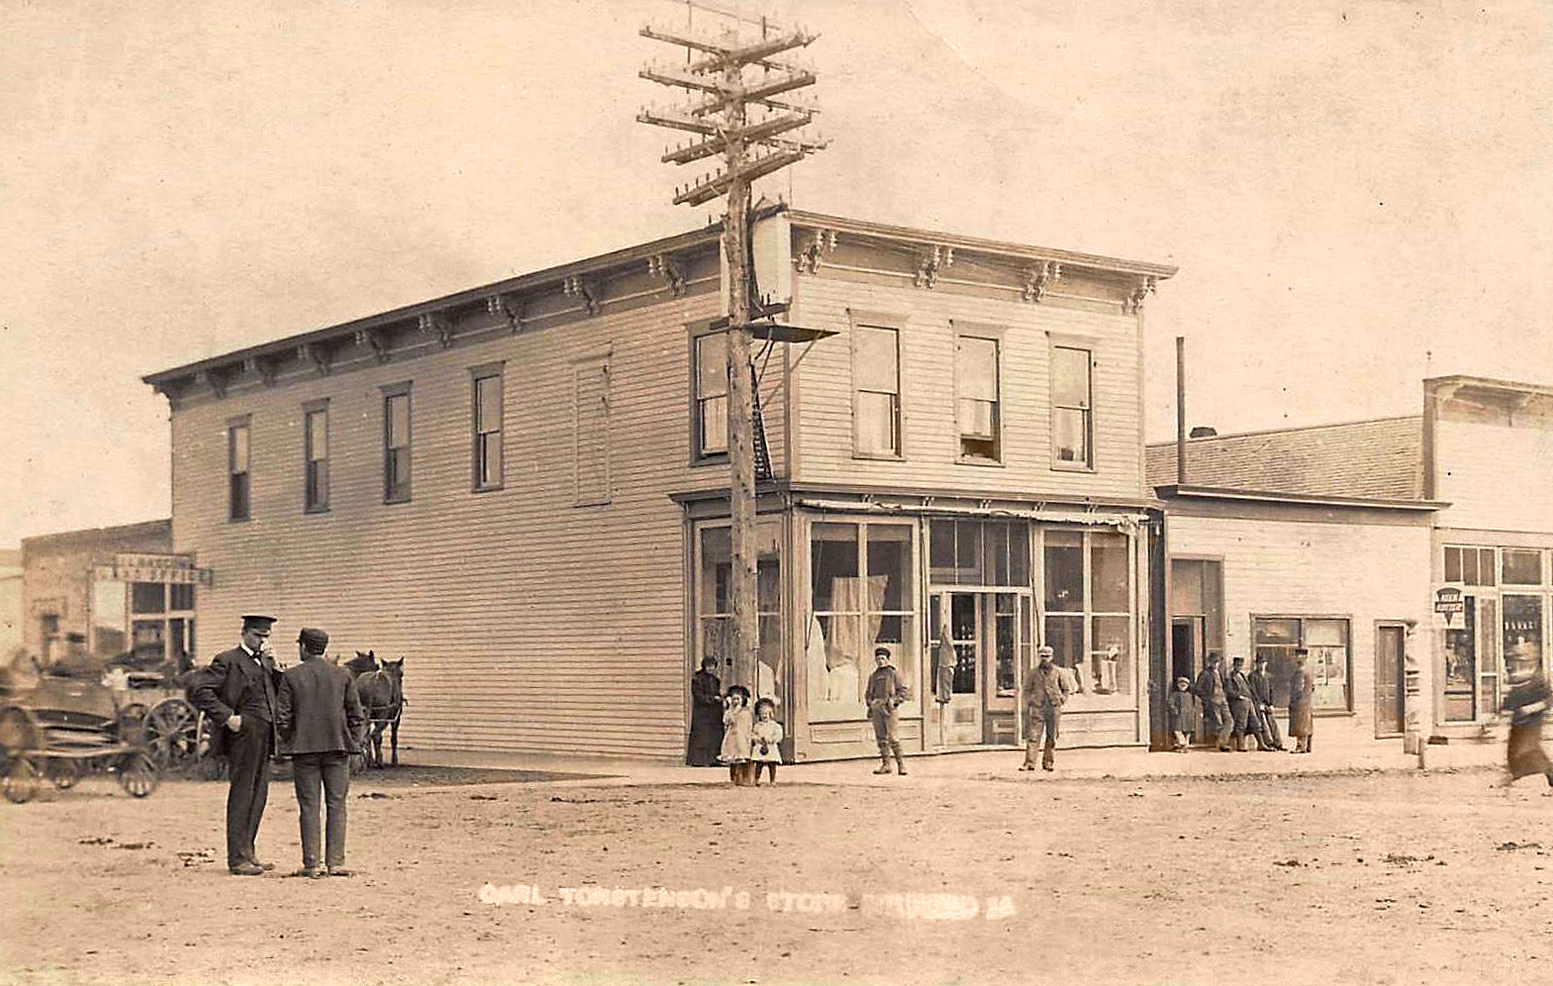 Torstensen Store Milford Iowa early 1900s